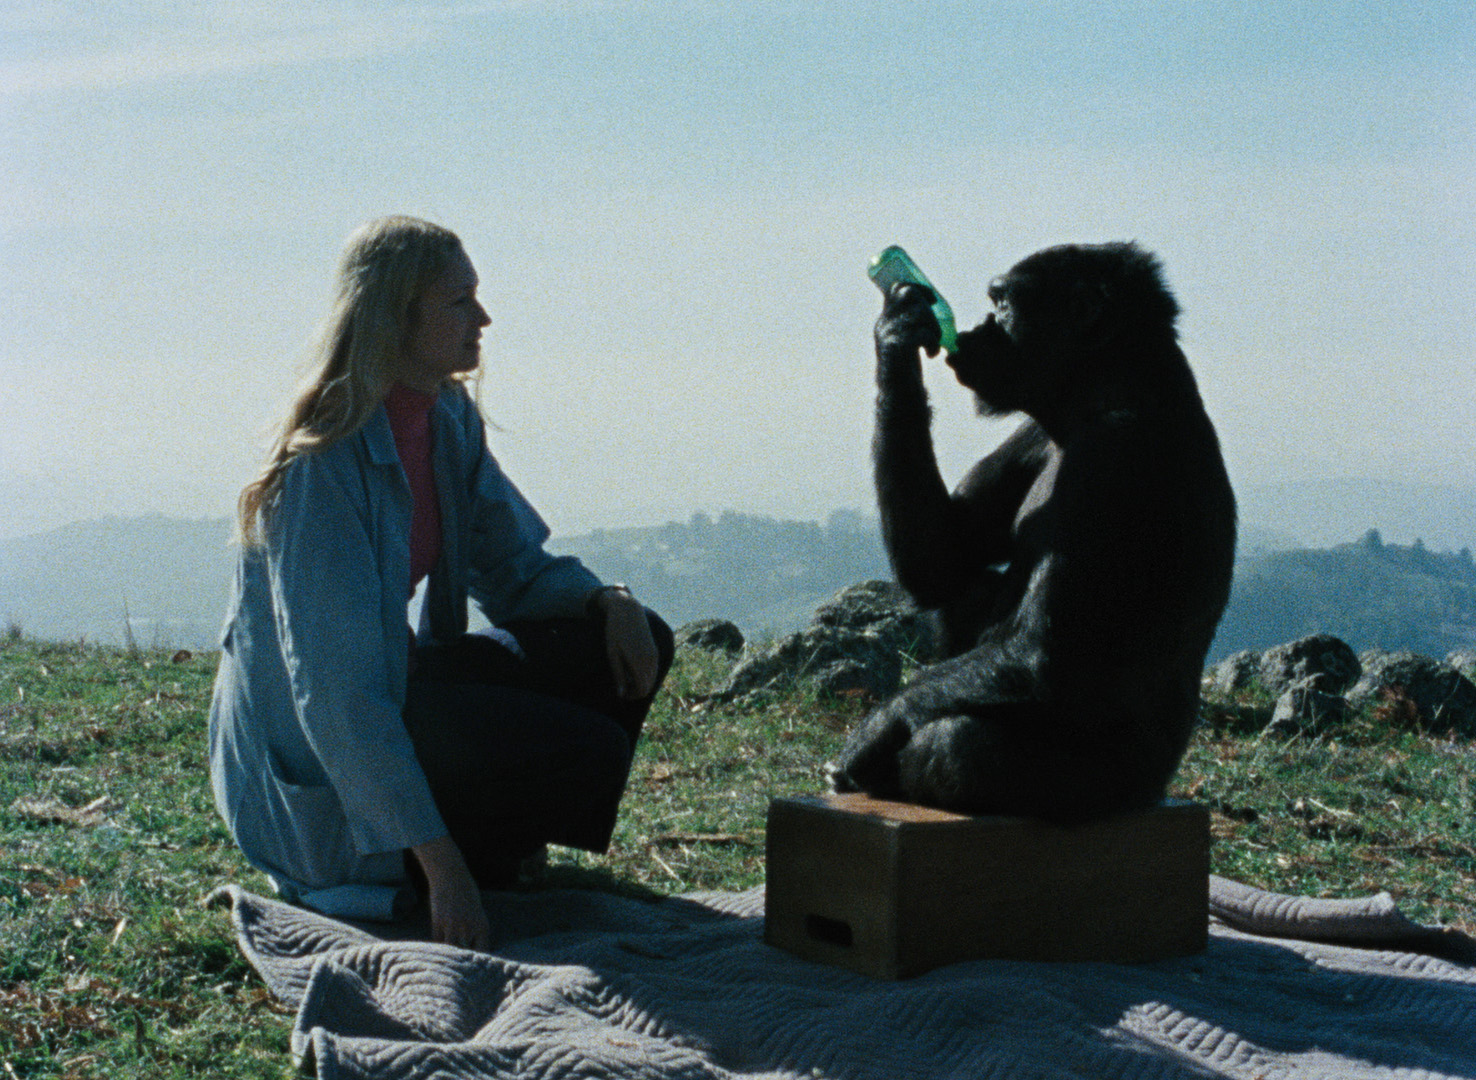 Koko, le gorille qui parle de Barbet Schroeder - Coffret Carlotta